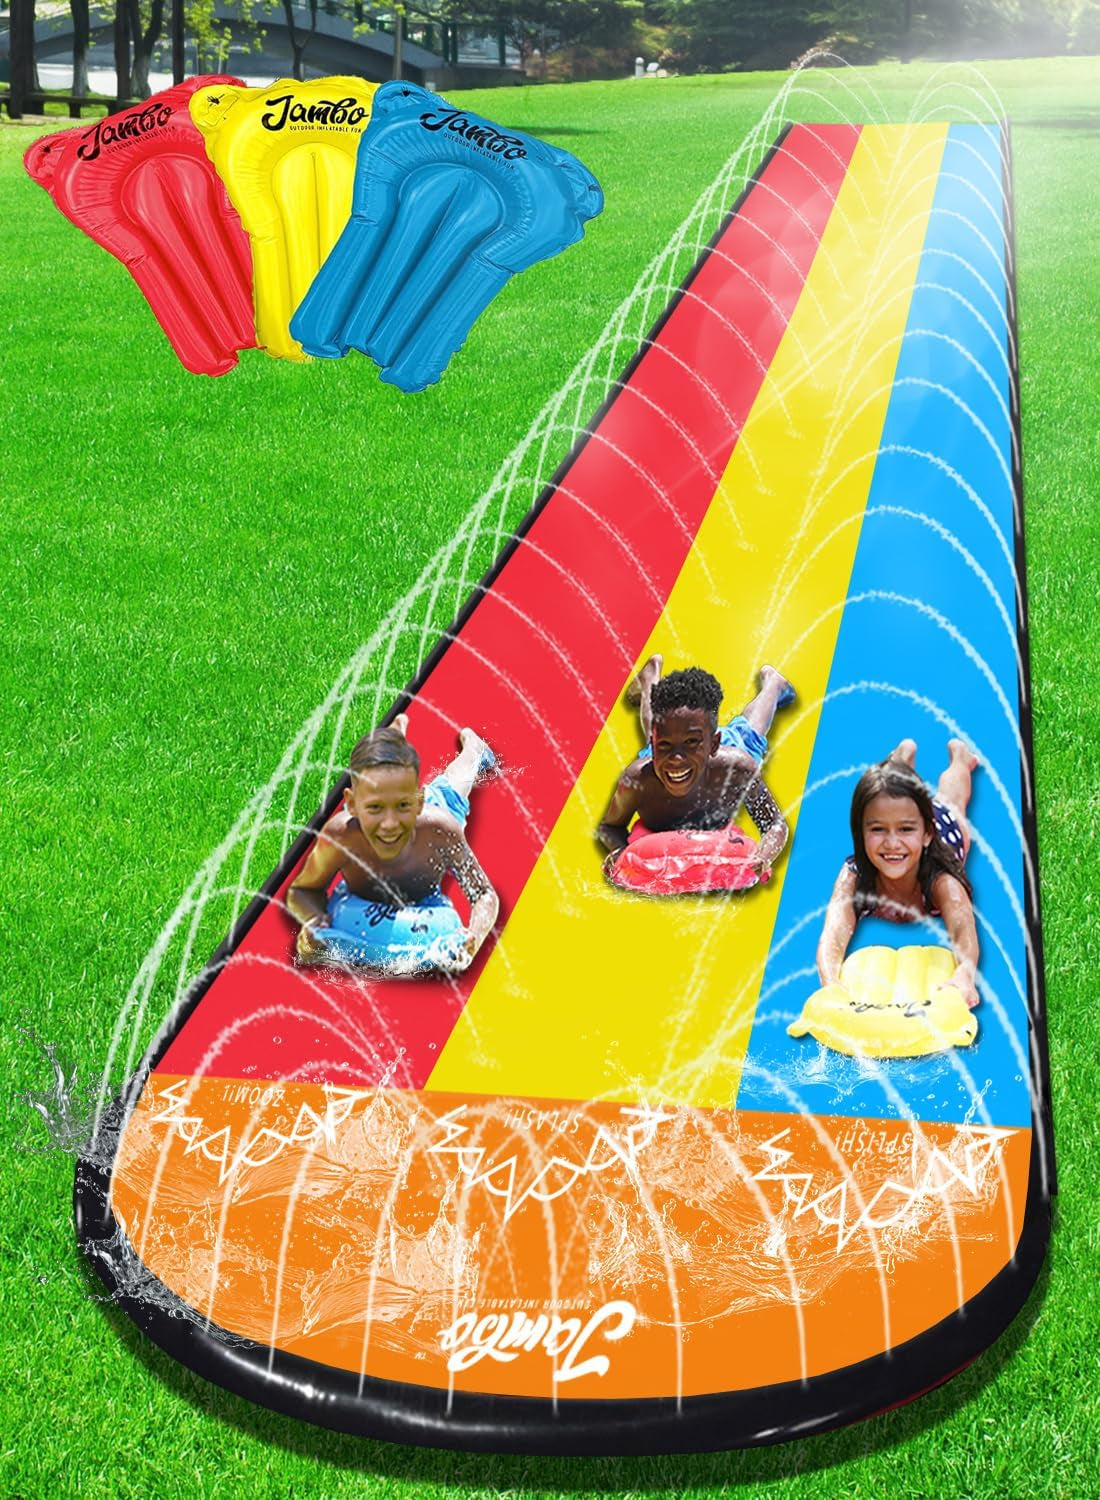 XL Premium Slip Splash and Slide with 3 Bodyboards, Heavy Duty Water Slide with Advanced 3-Way Water Sprinkler System, Backyard Waterslide Outdoor Water Toys N Slides for Kids…